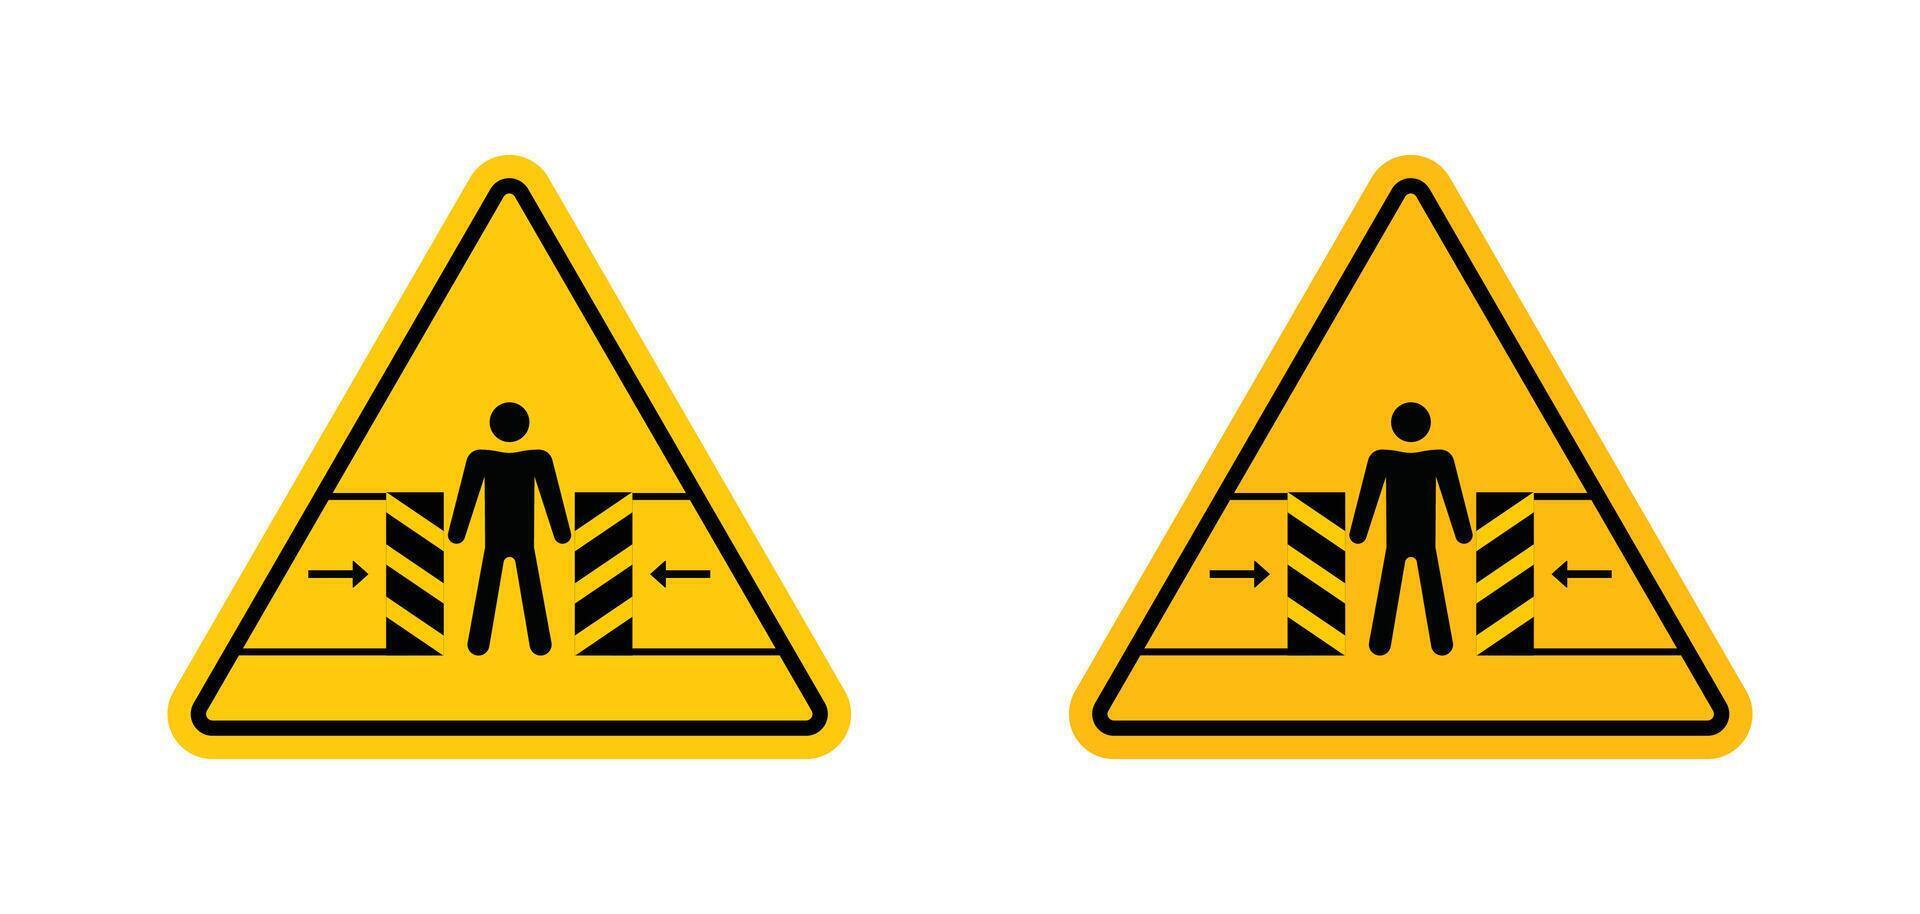 Risk of crushing warning sign vector